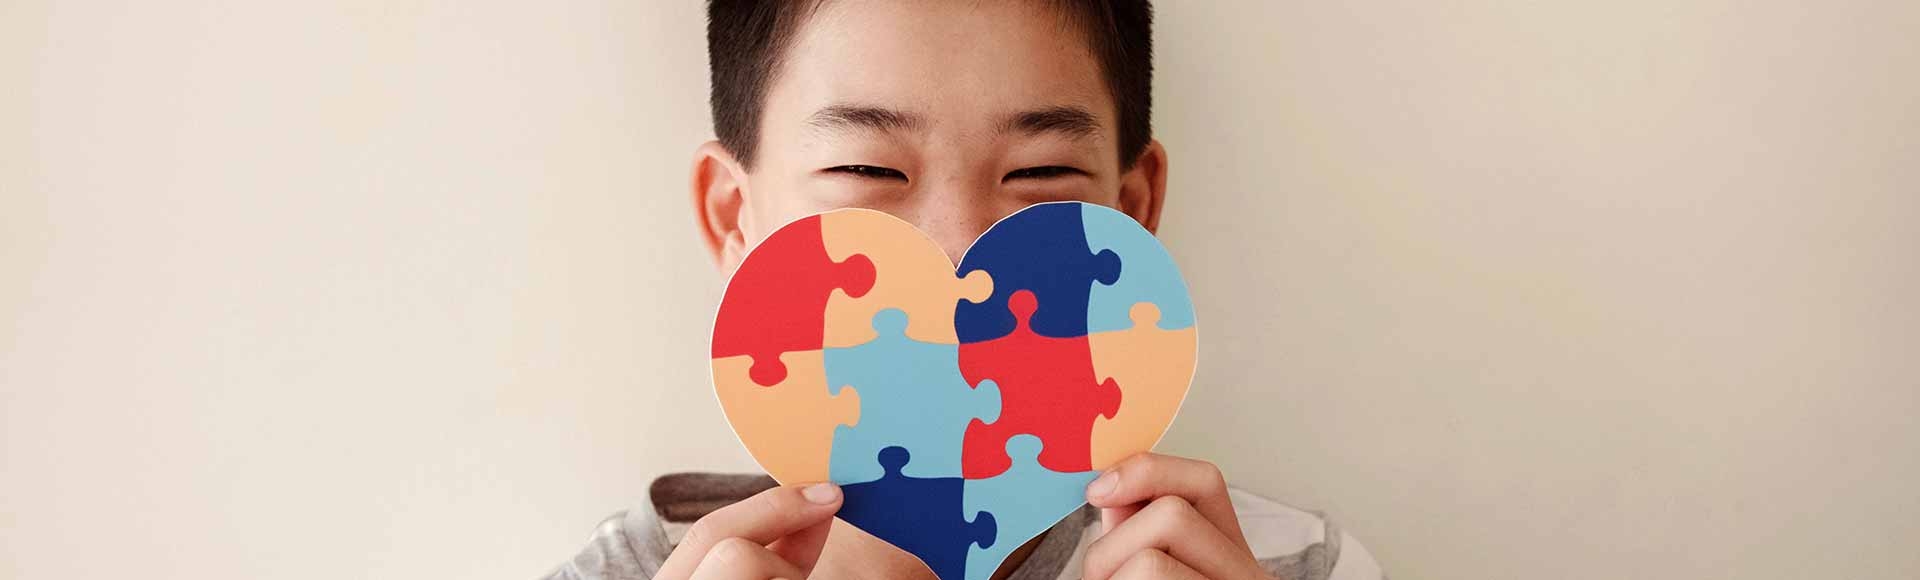 Identifying Autism in Children